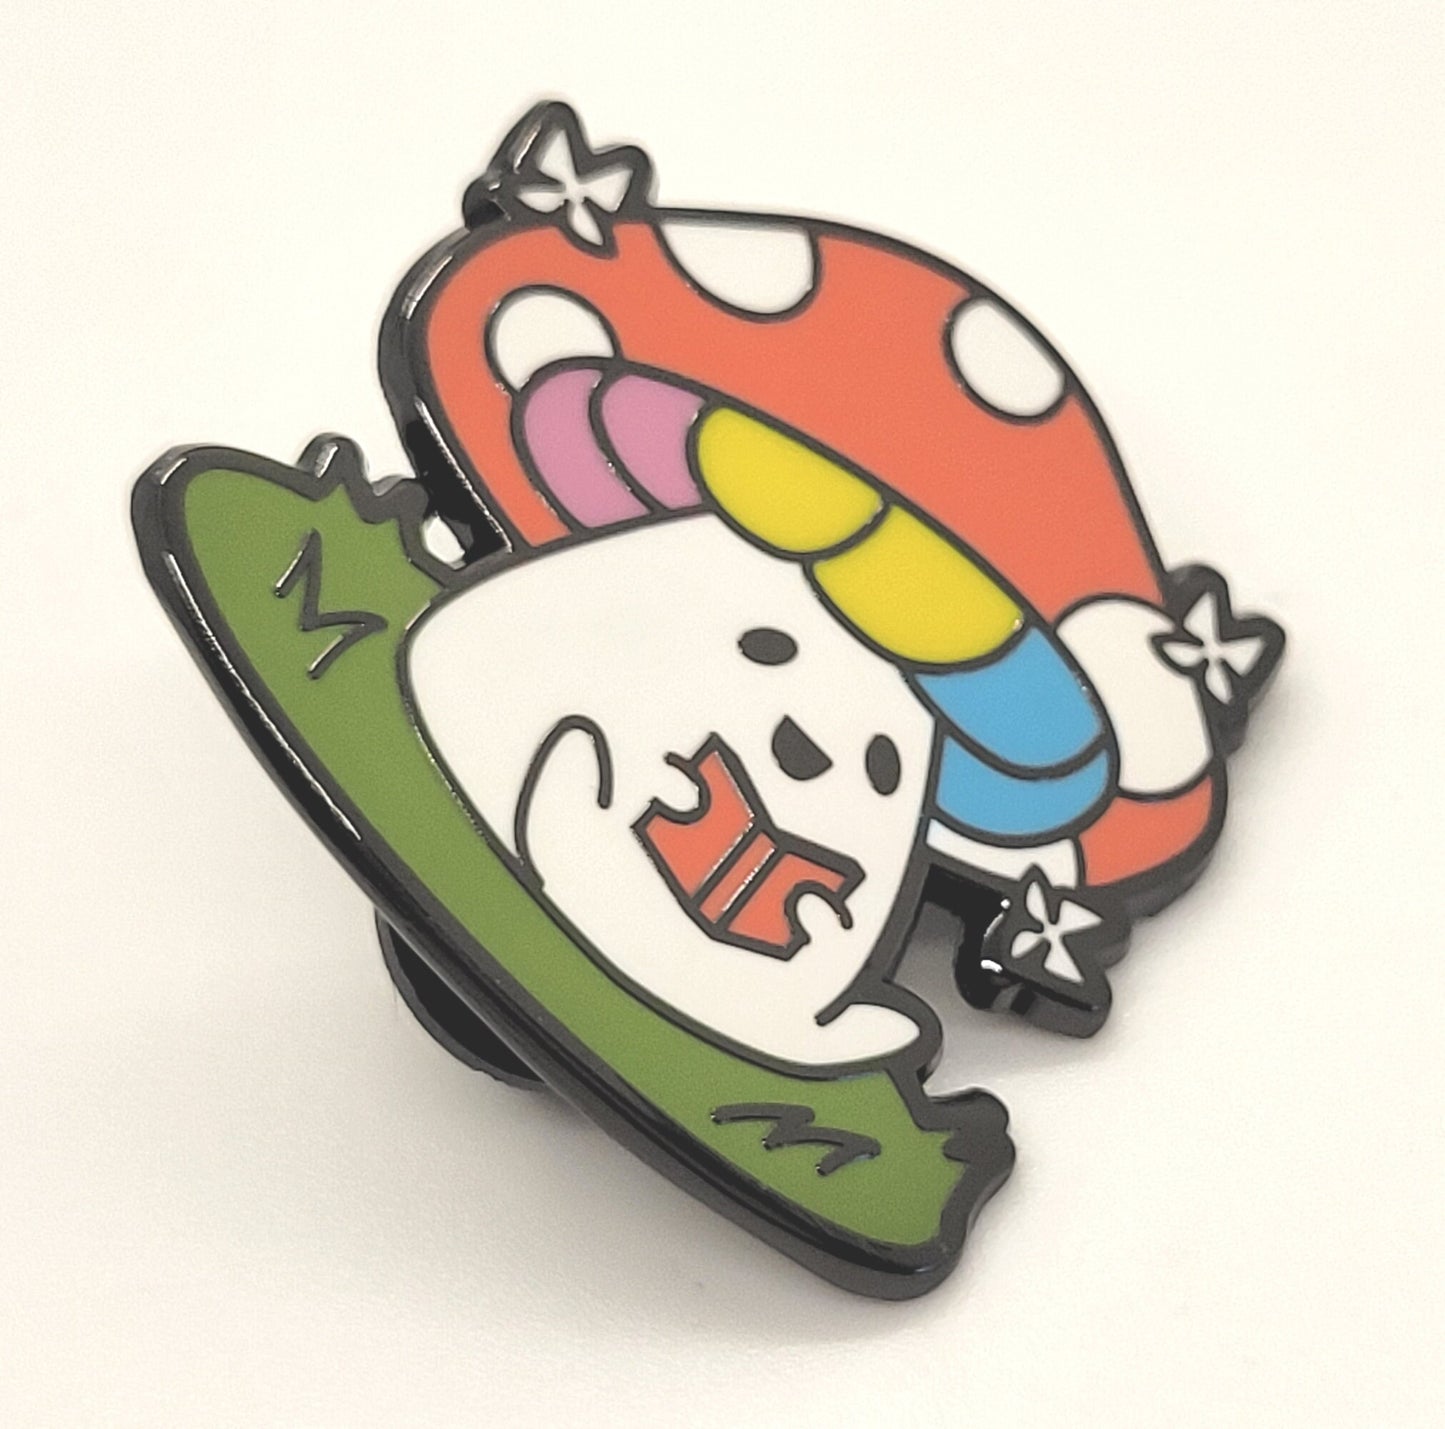 Adorable Mushroom Pan Pride Pin Hard Enamel with Pansexual Flag Colors | Subtle Gay Pin | *FREE SHIPPING*